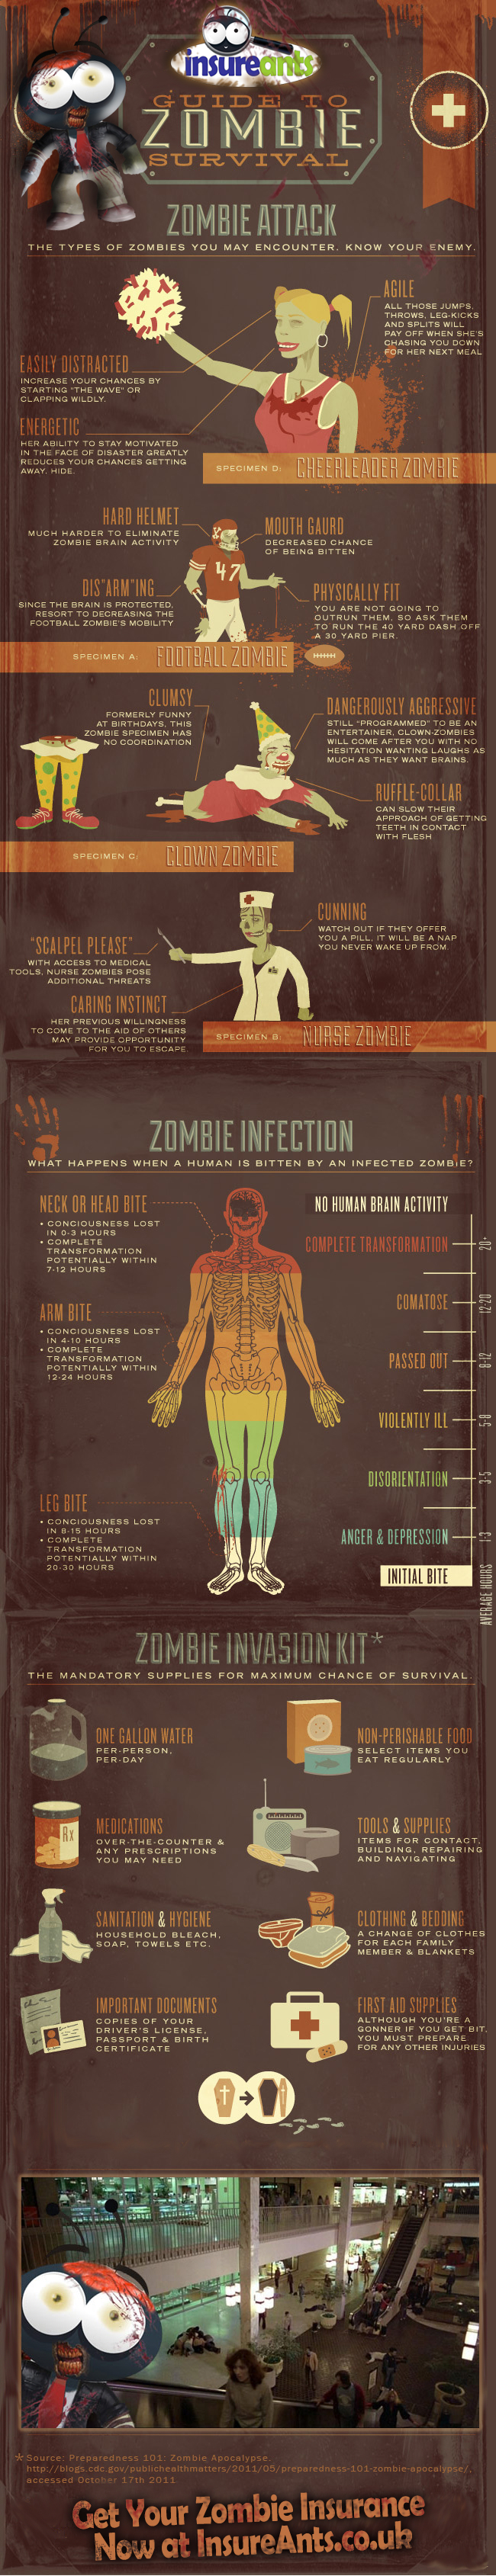 Zombie Invasion Survival Guide